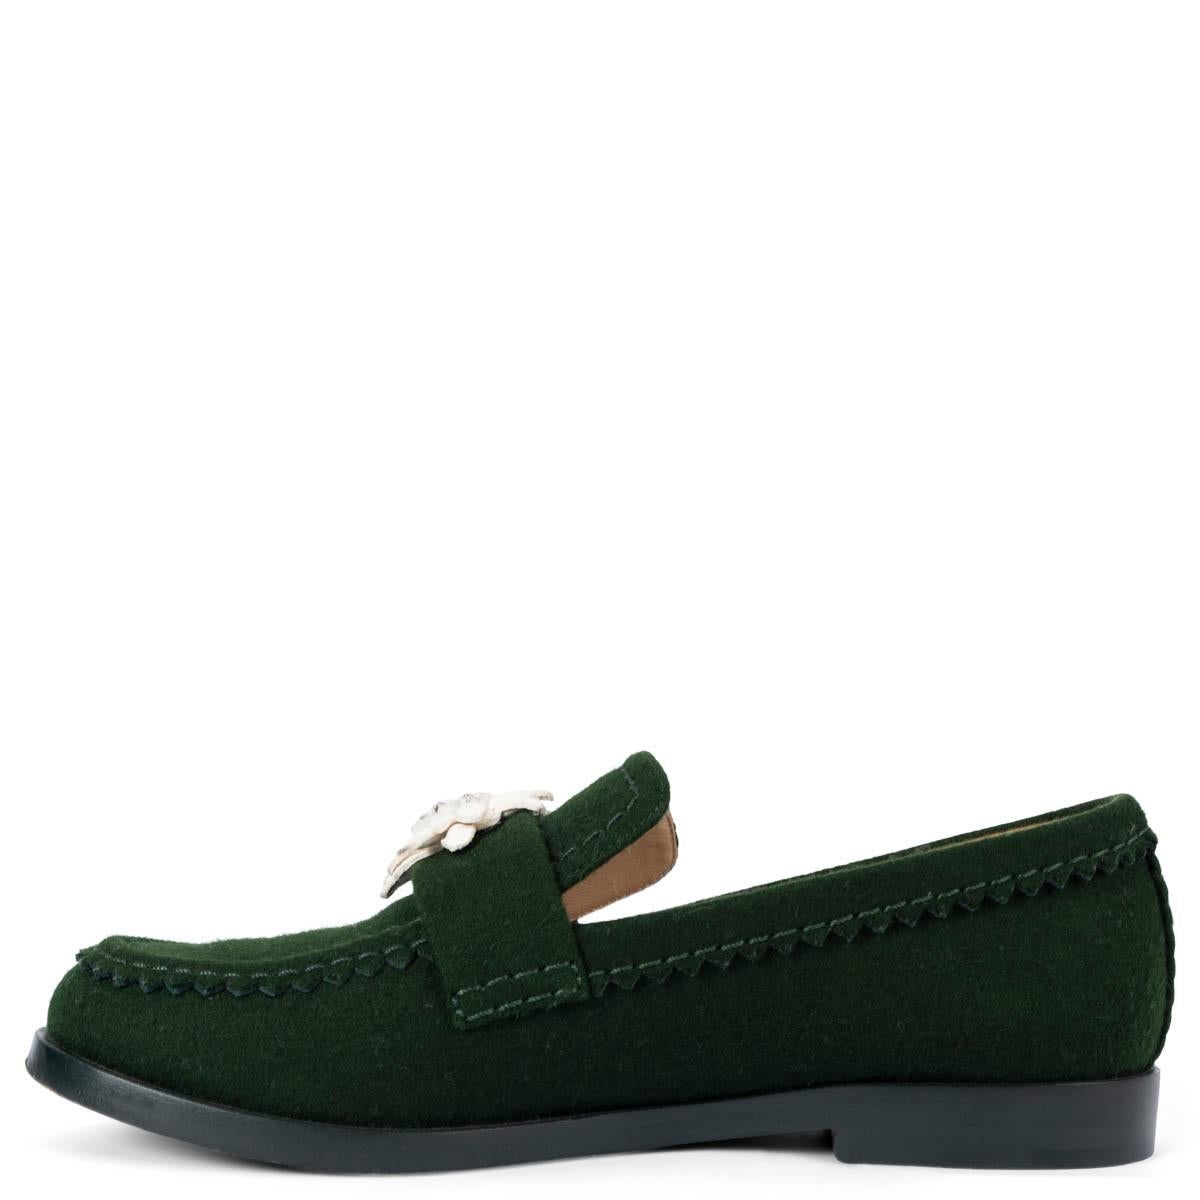 Women's CHANEL dark green felt 2015 15A SALZBURG Loafers Flats Shoes 39 fit 38.5